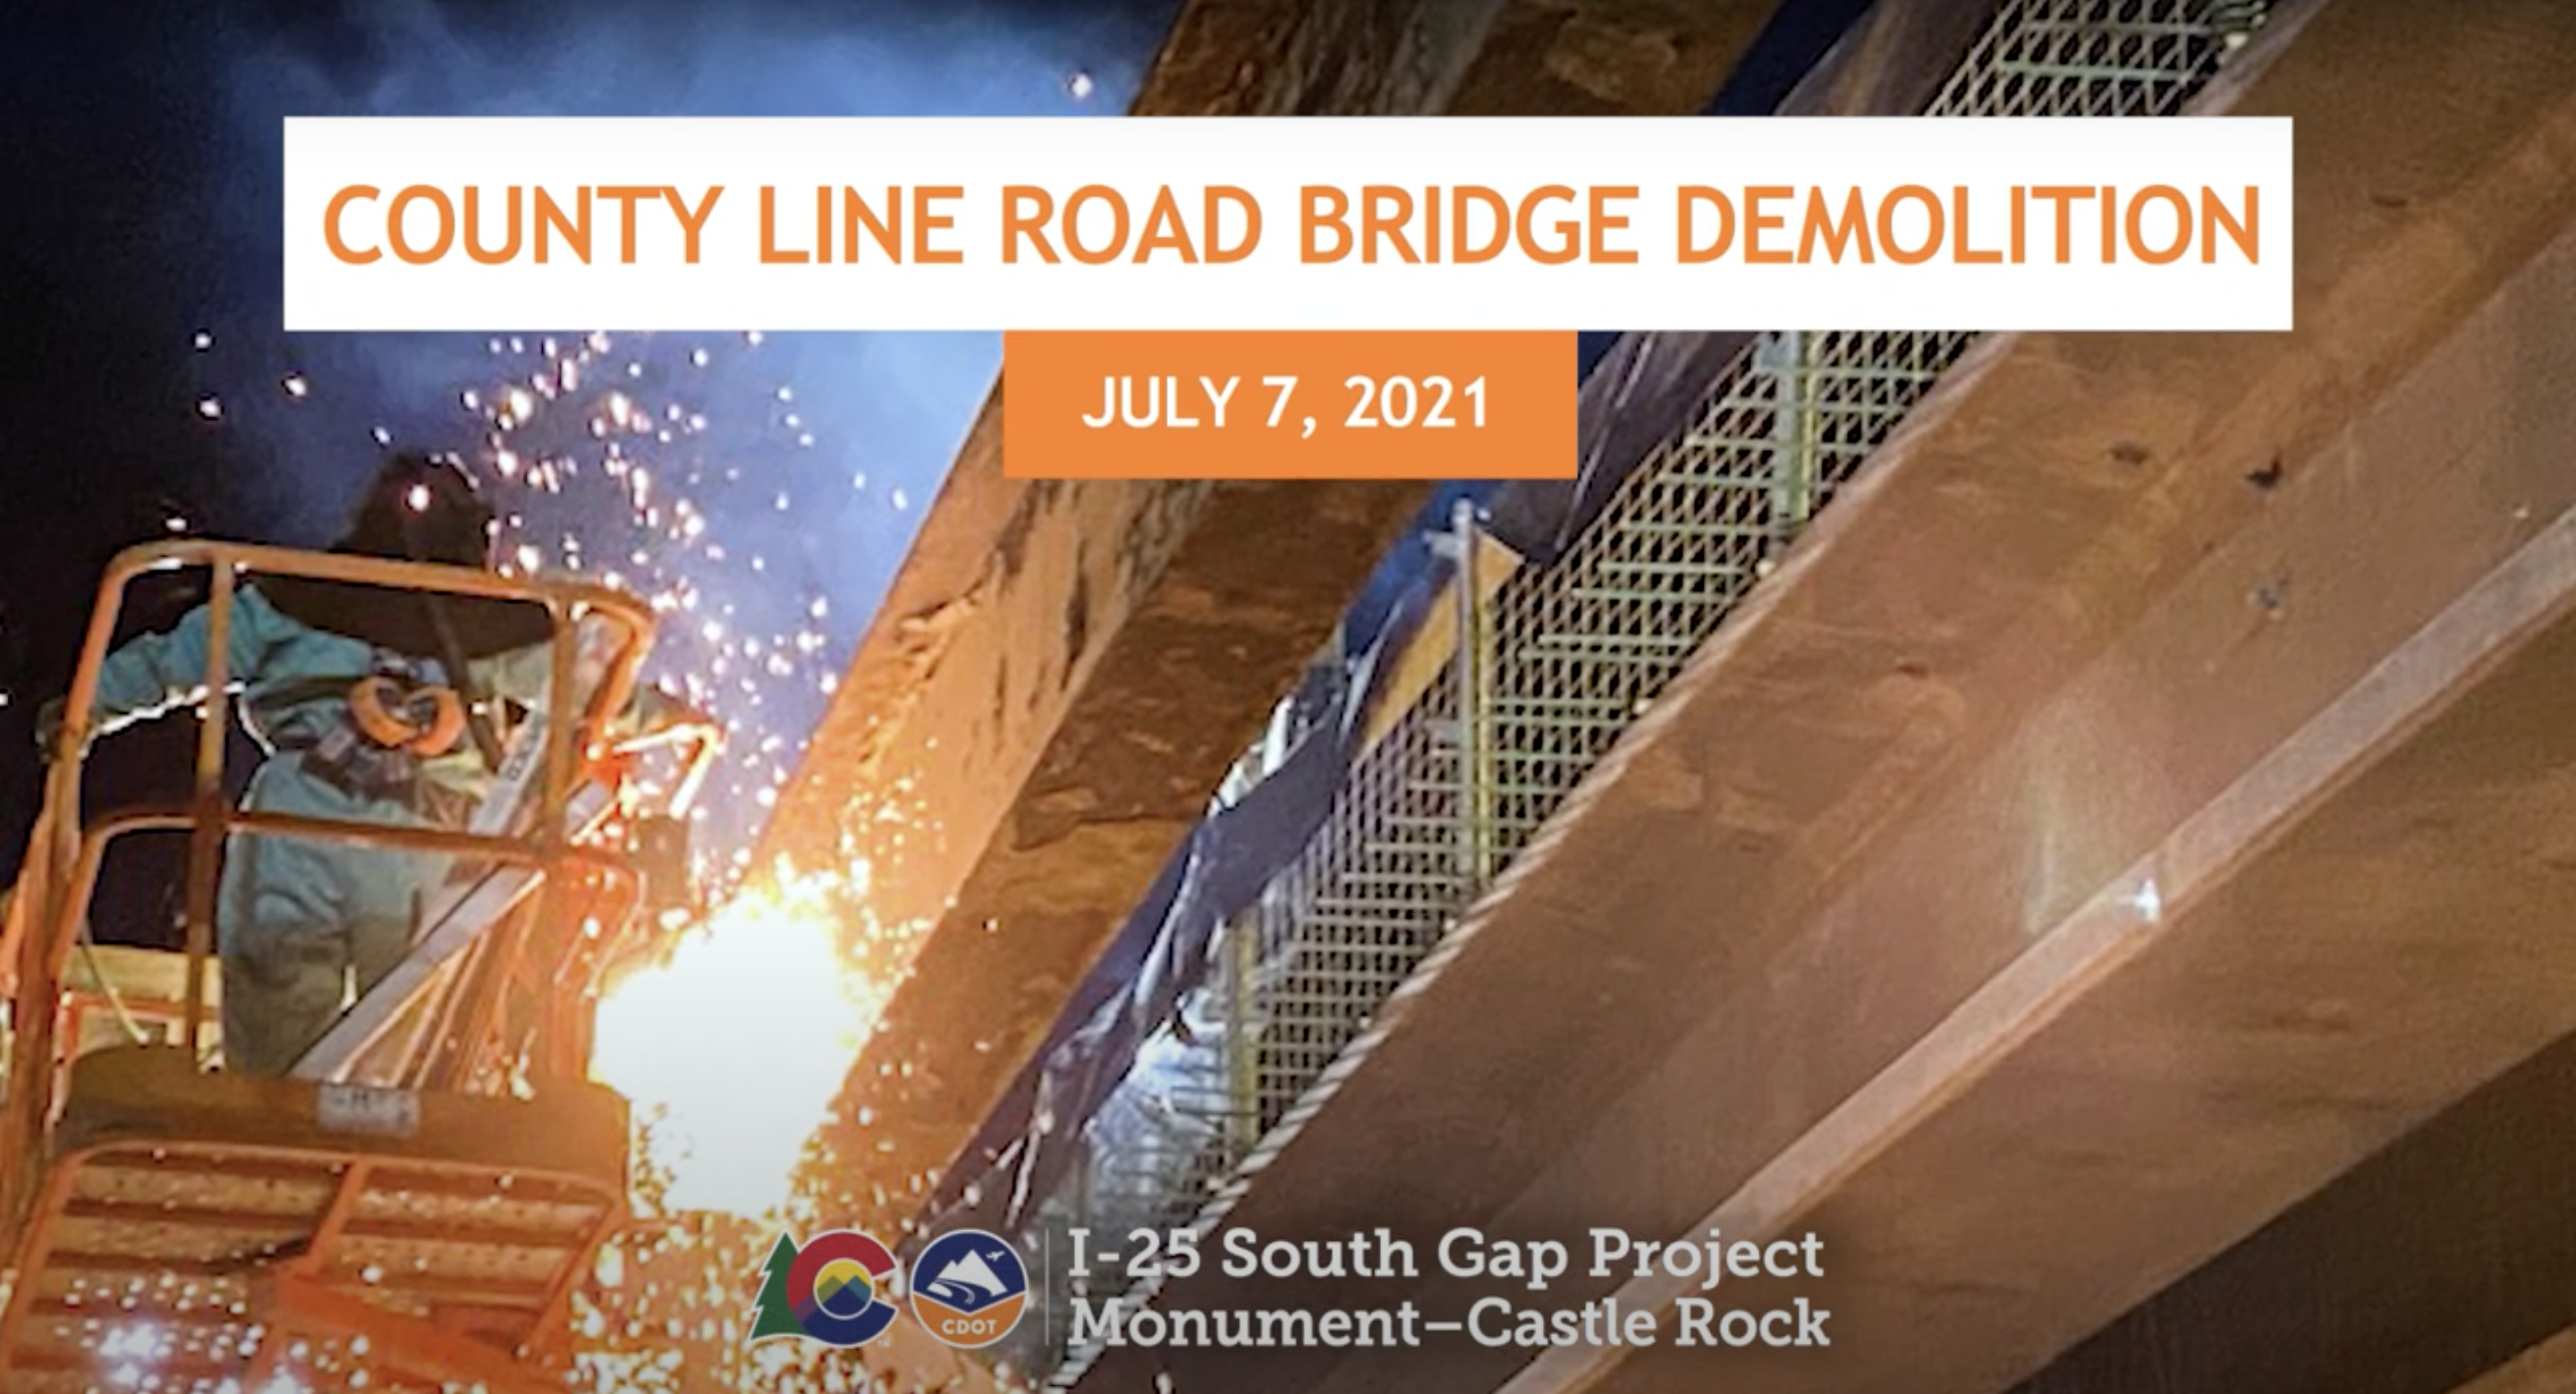 I-25 South Gap County Line Road Bridge Demolition detail image